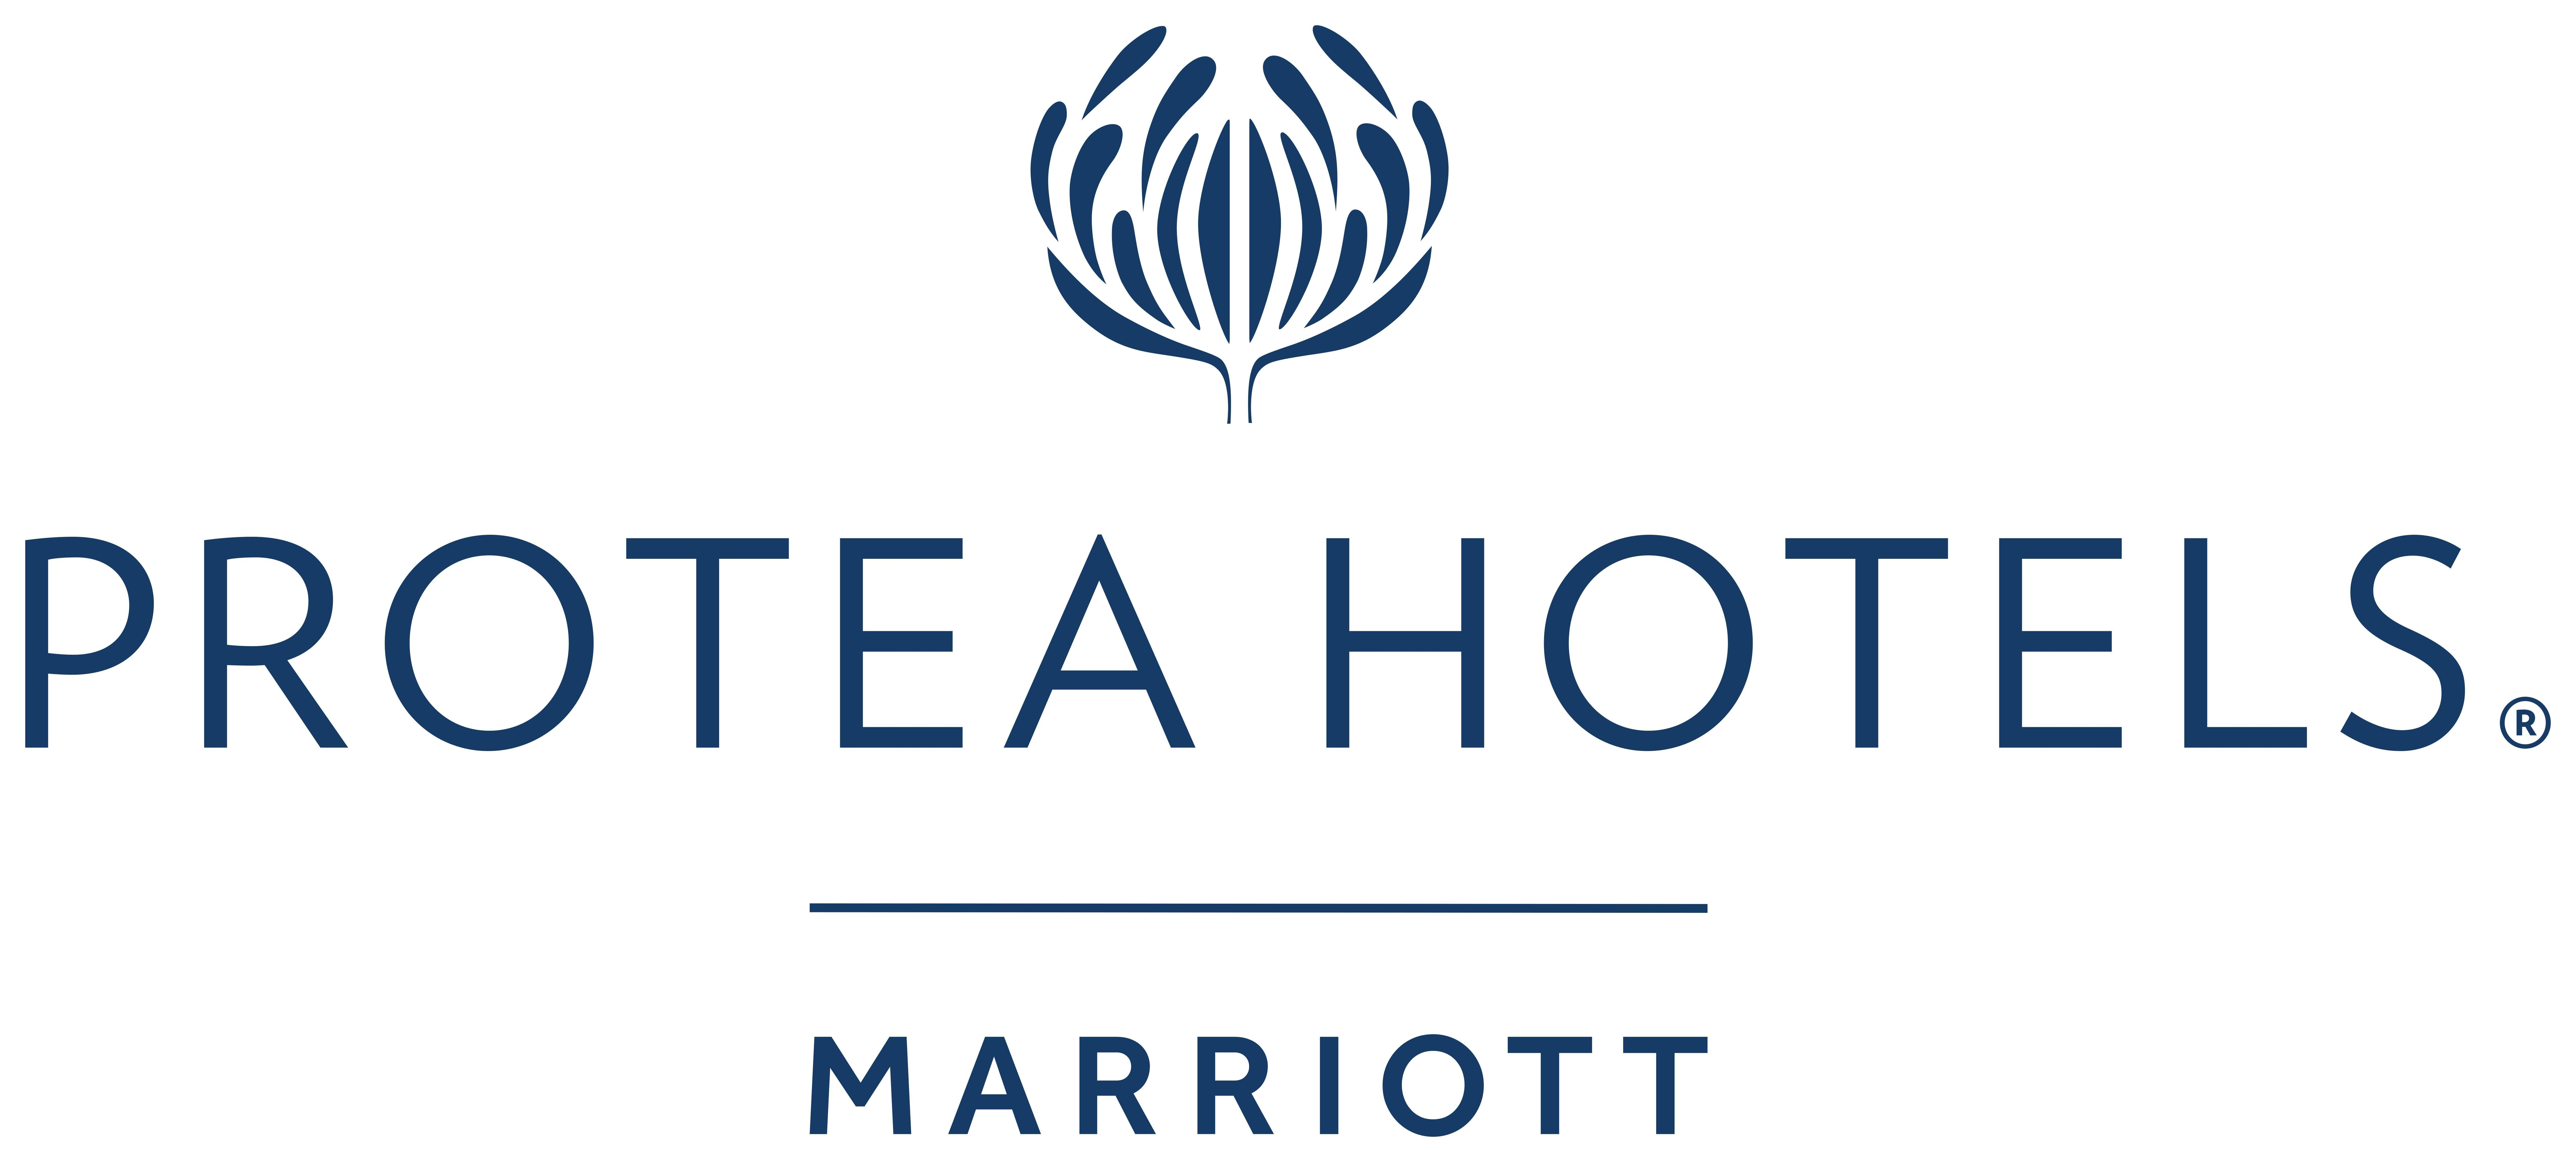 Hotles Logo - Brand Photos & Logos | Marriott News Center